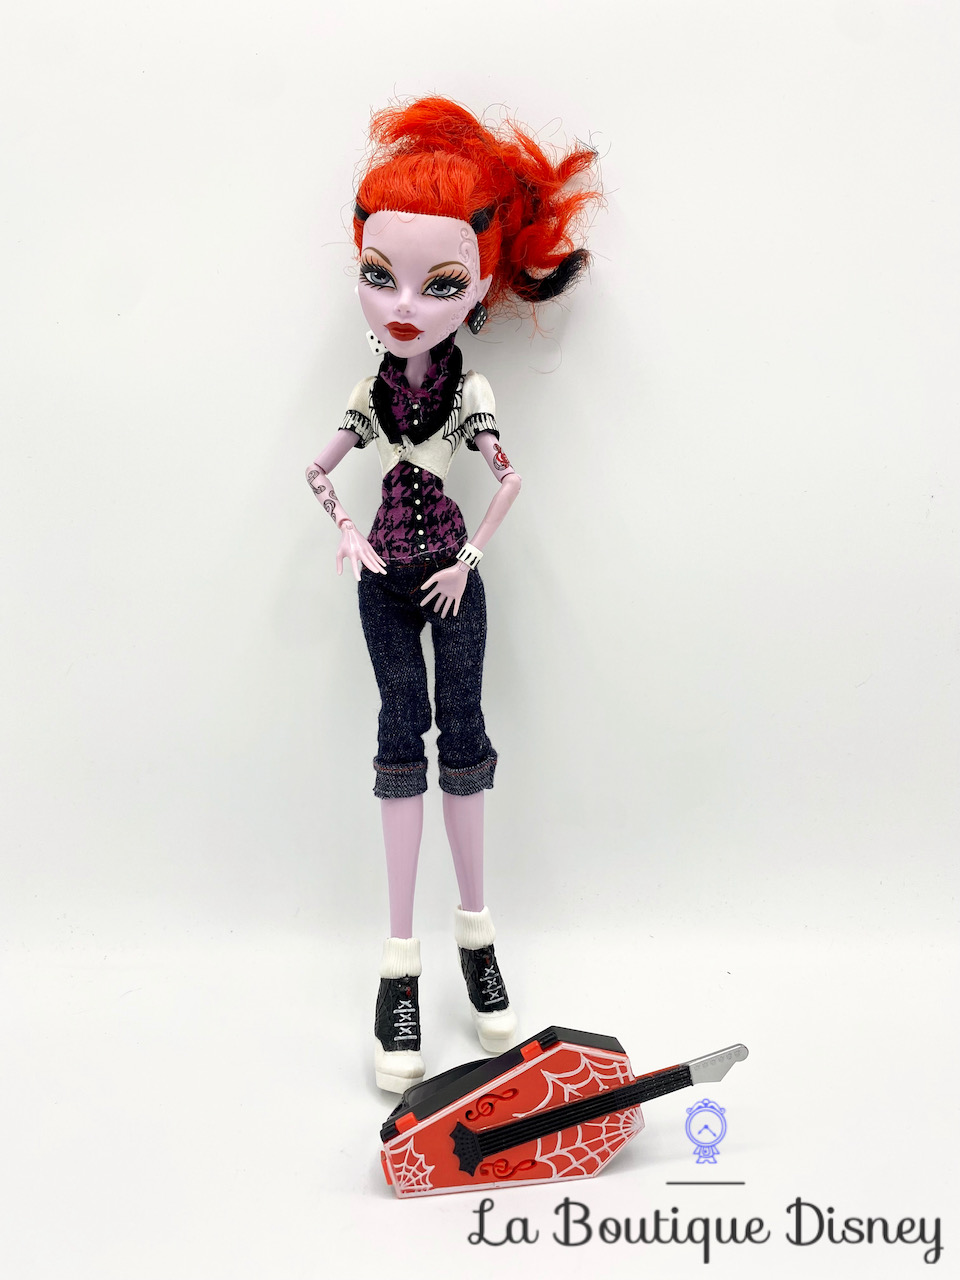 Poupée Monster High Operetta Photo de classe Mattel rouge guitare